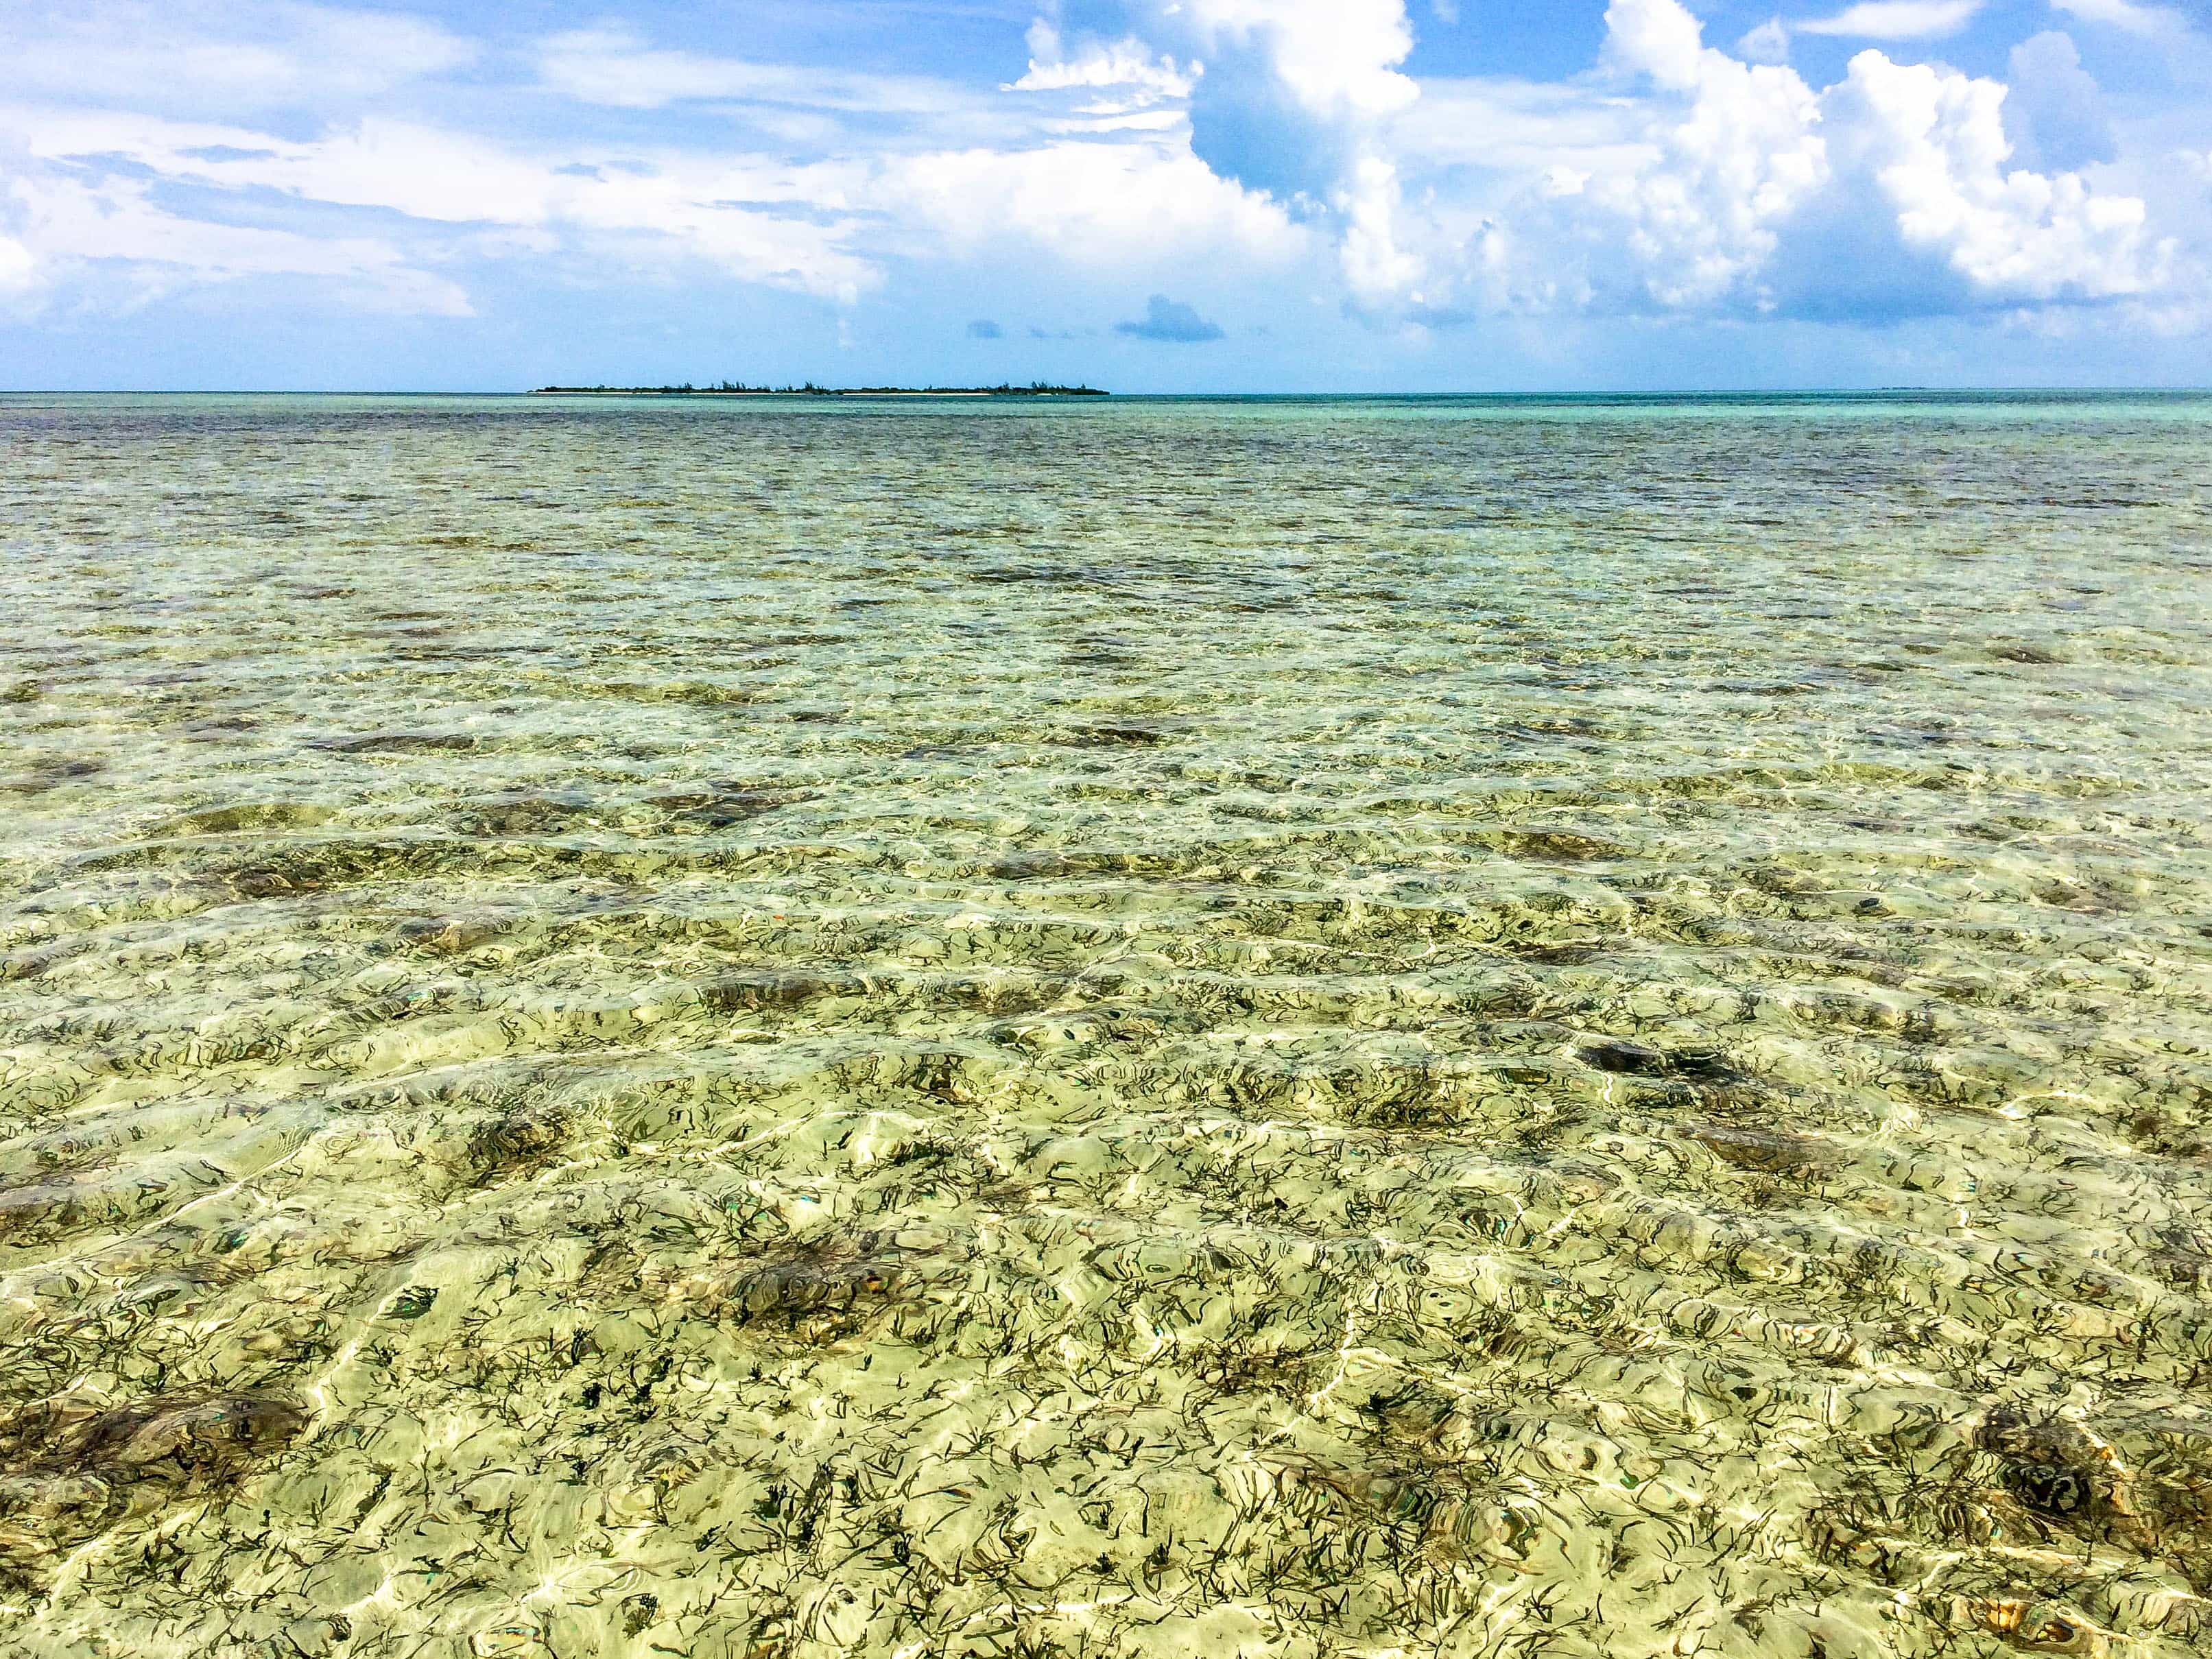 Prime fishing ground near Deep Water Cay, The Bahamas